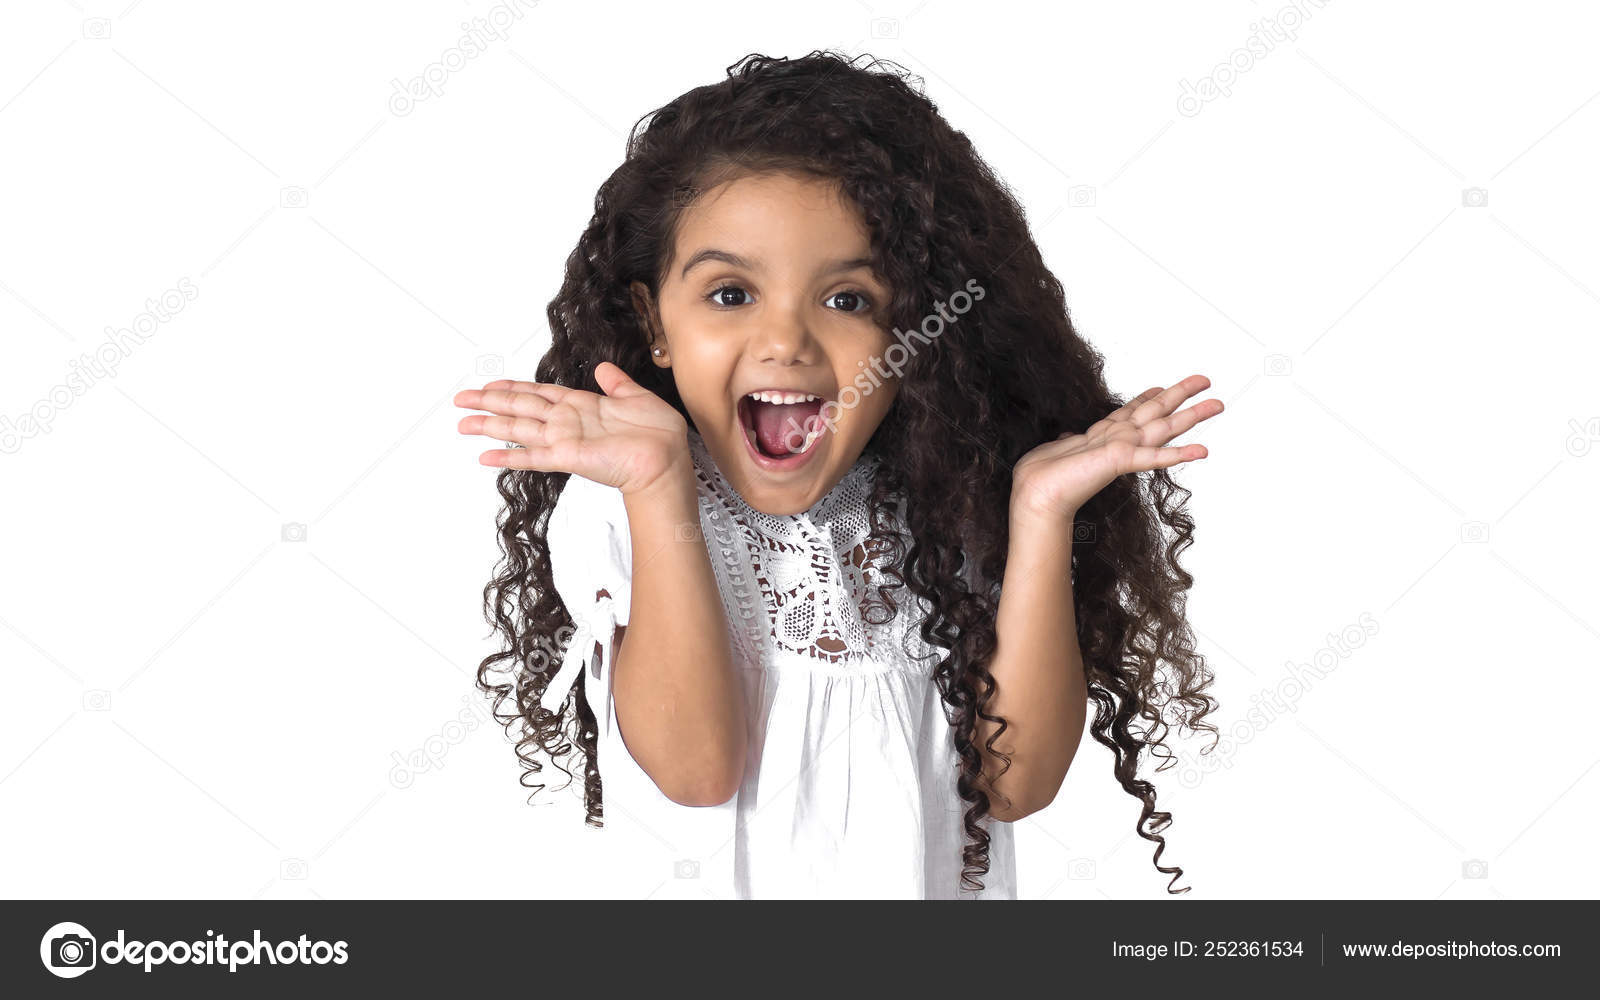 depositphotos 252361534 stock photo happy child brunette kids brazilian